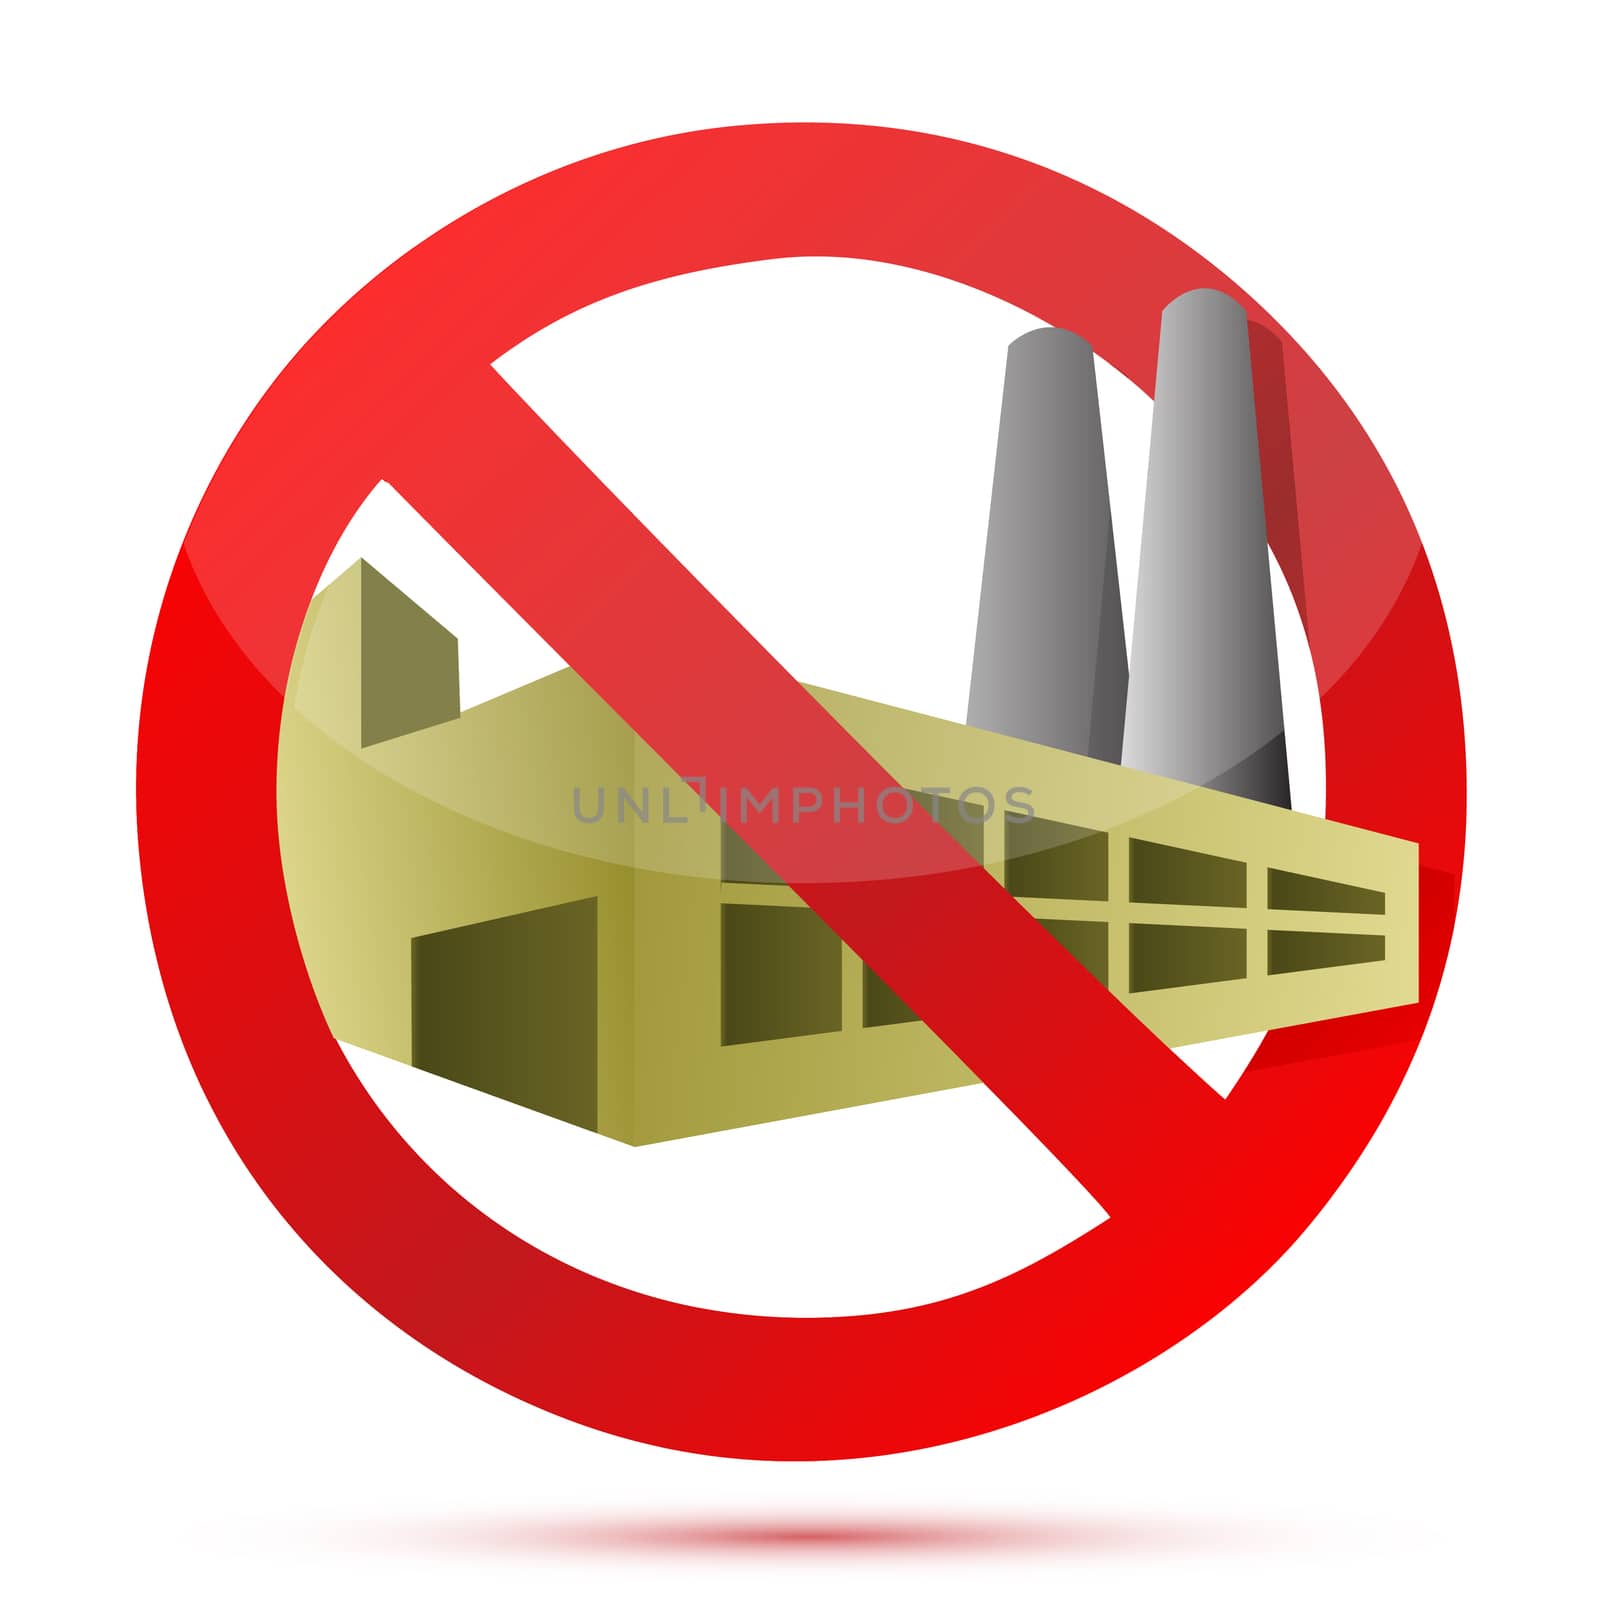 factory forbidden sign illustration design over white background